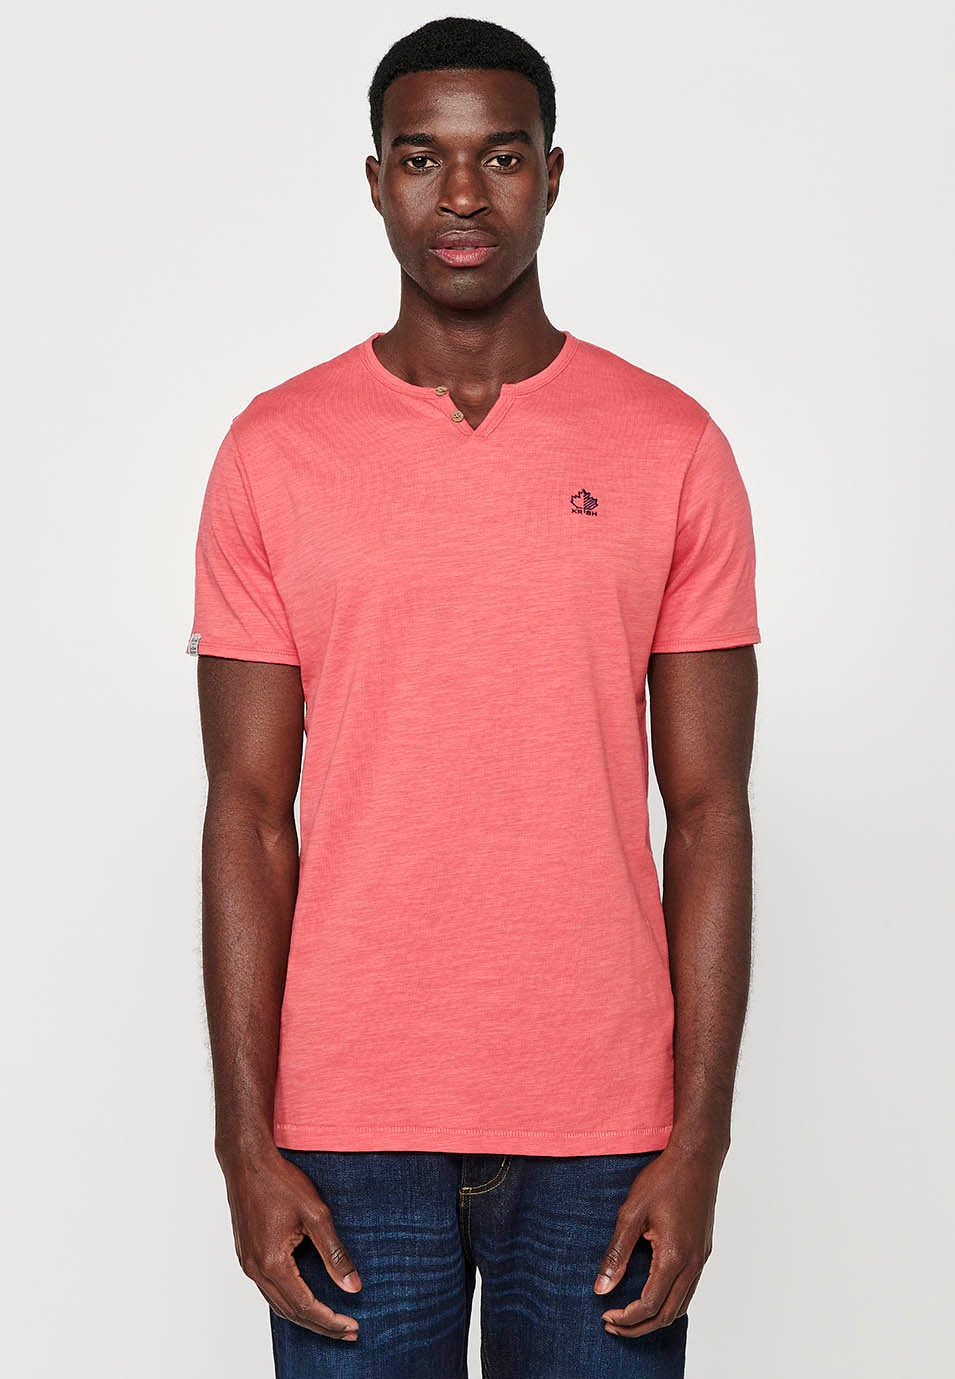 Basic short-sleeved cotton T-shirt, V-neck with button, pink color for men 6